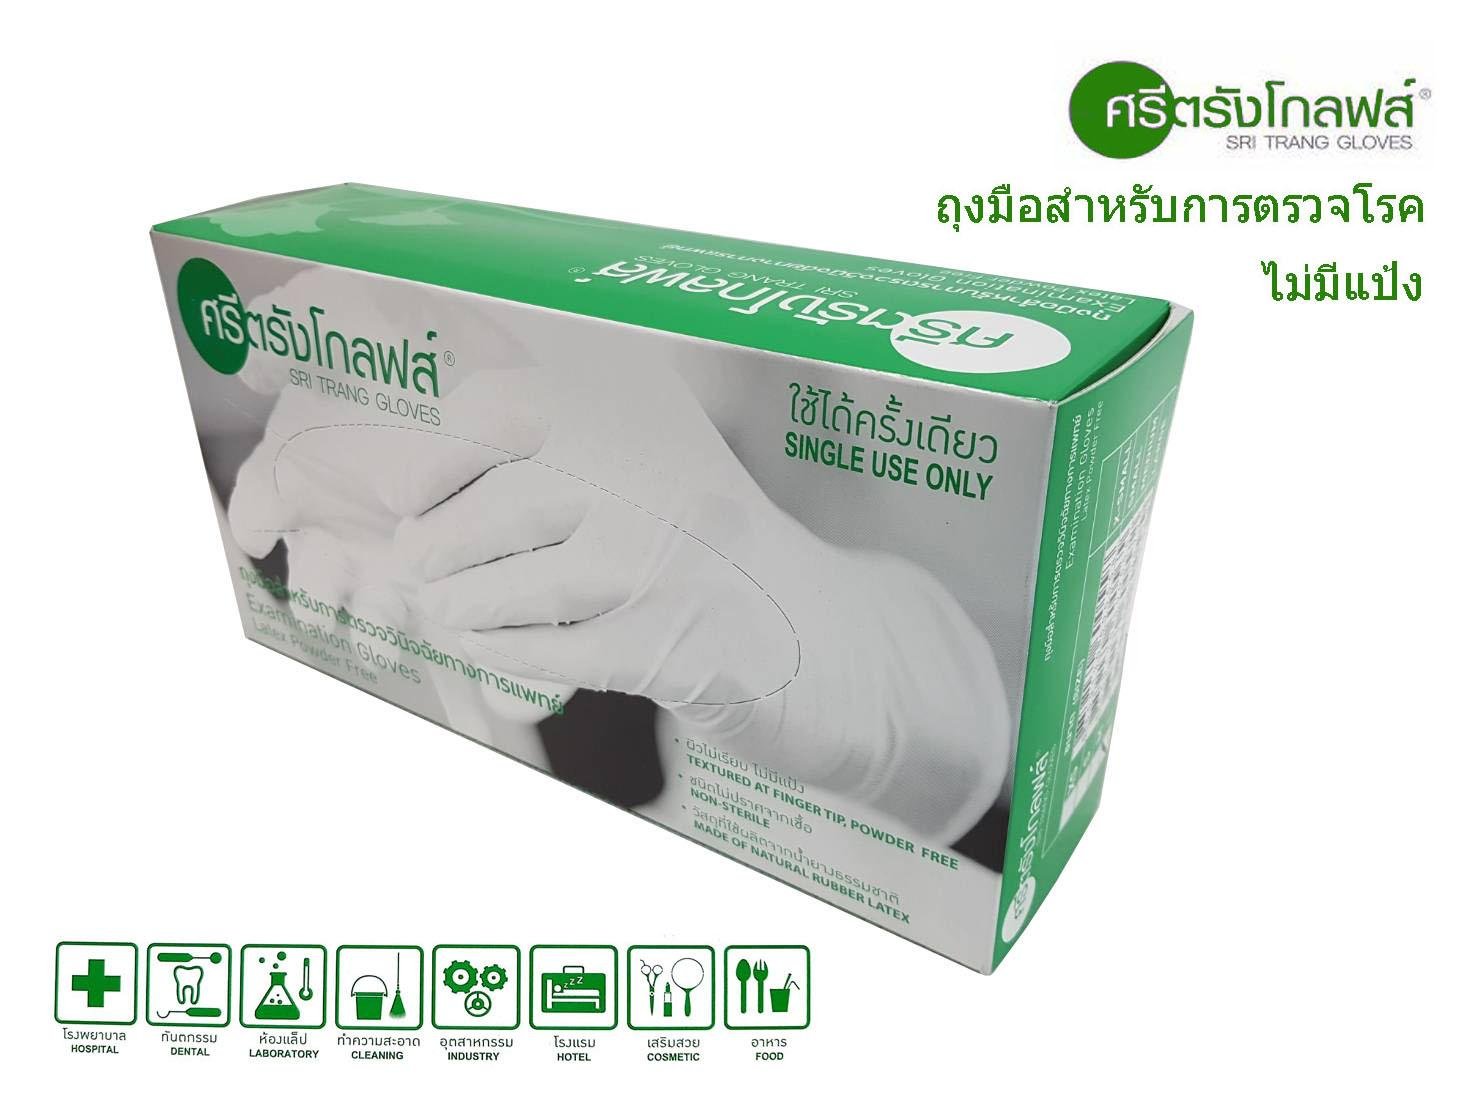 Latex Powder Free Sri Trang Gloves # XS, S, M, L, Green Box